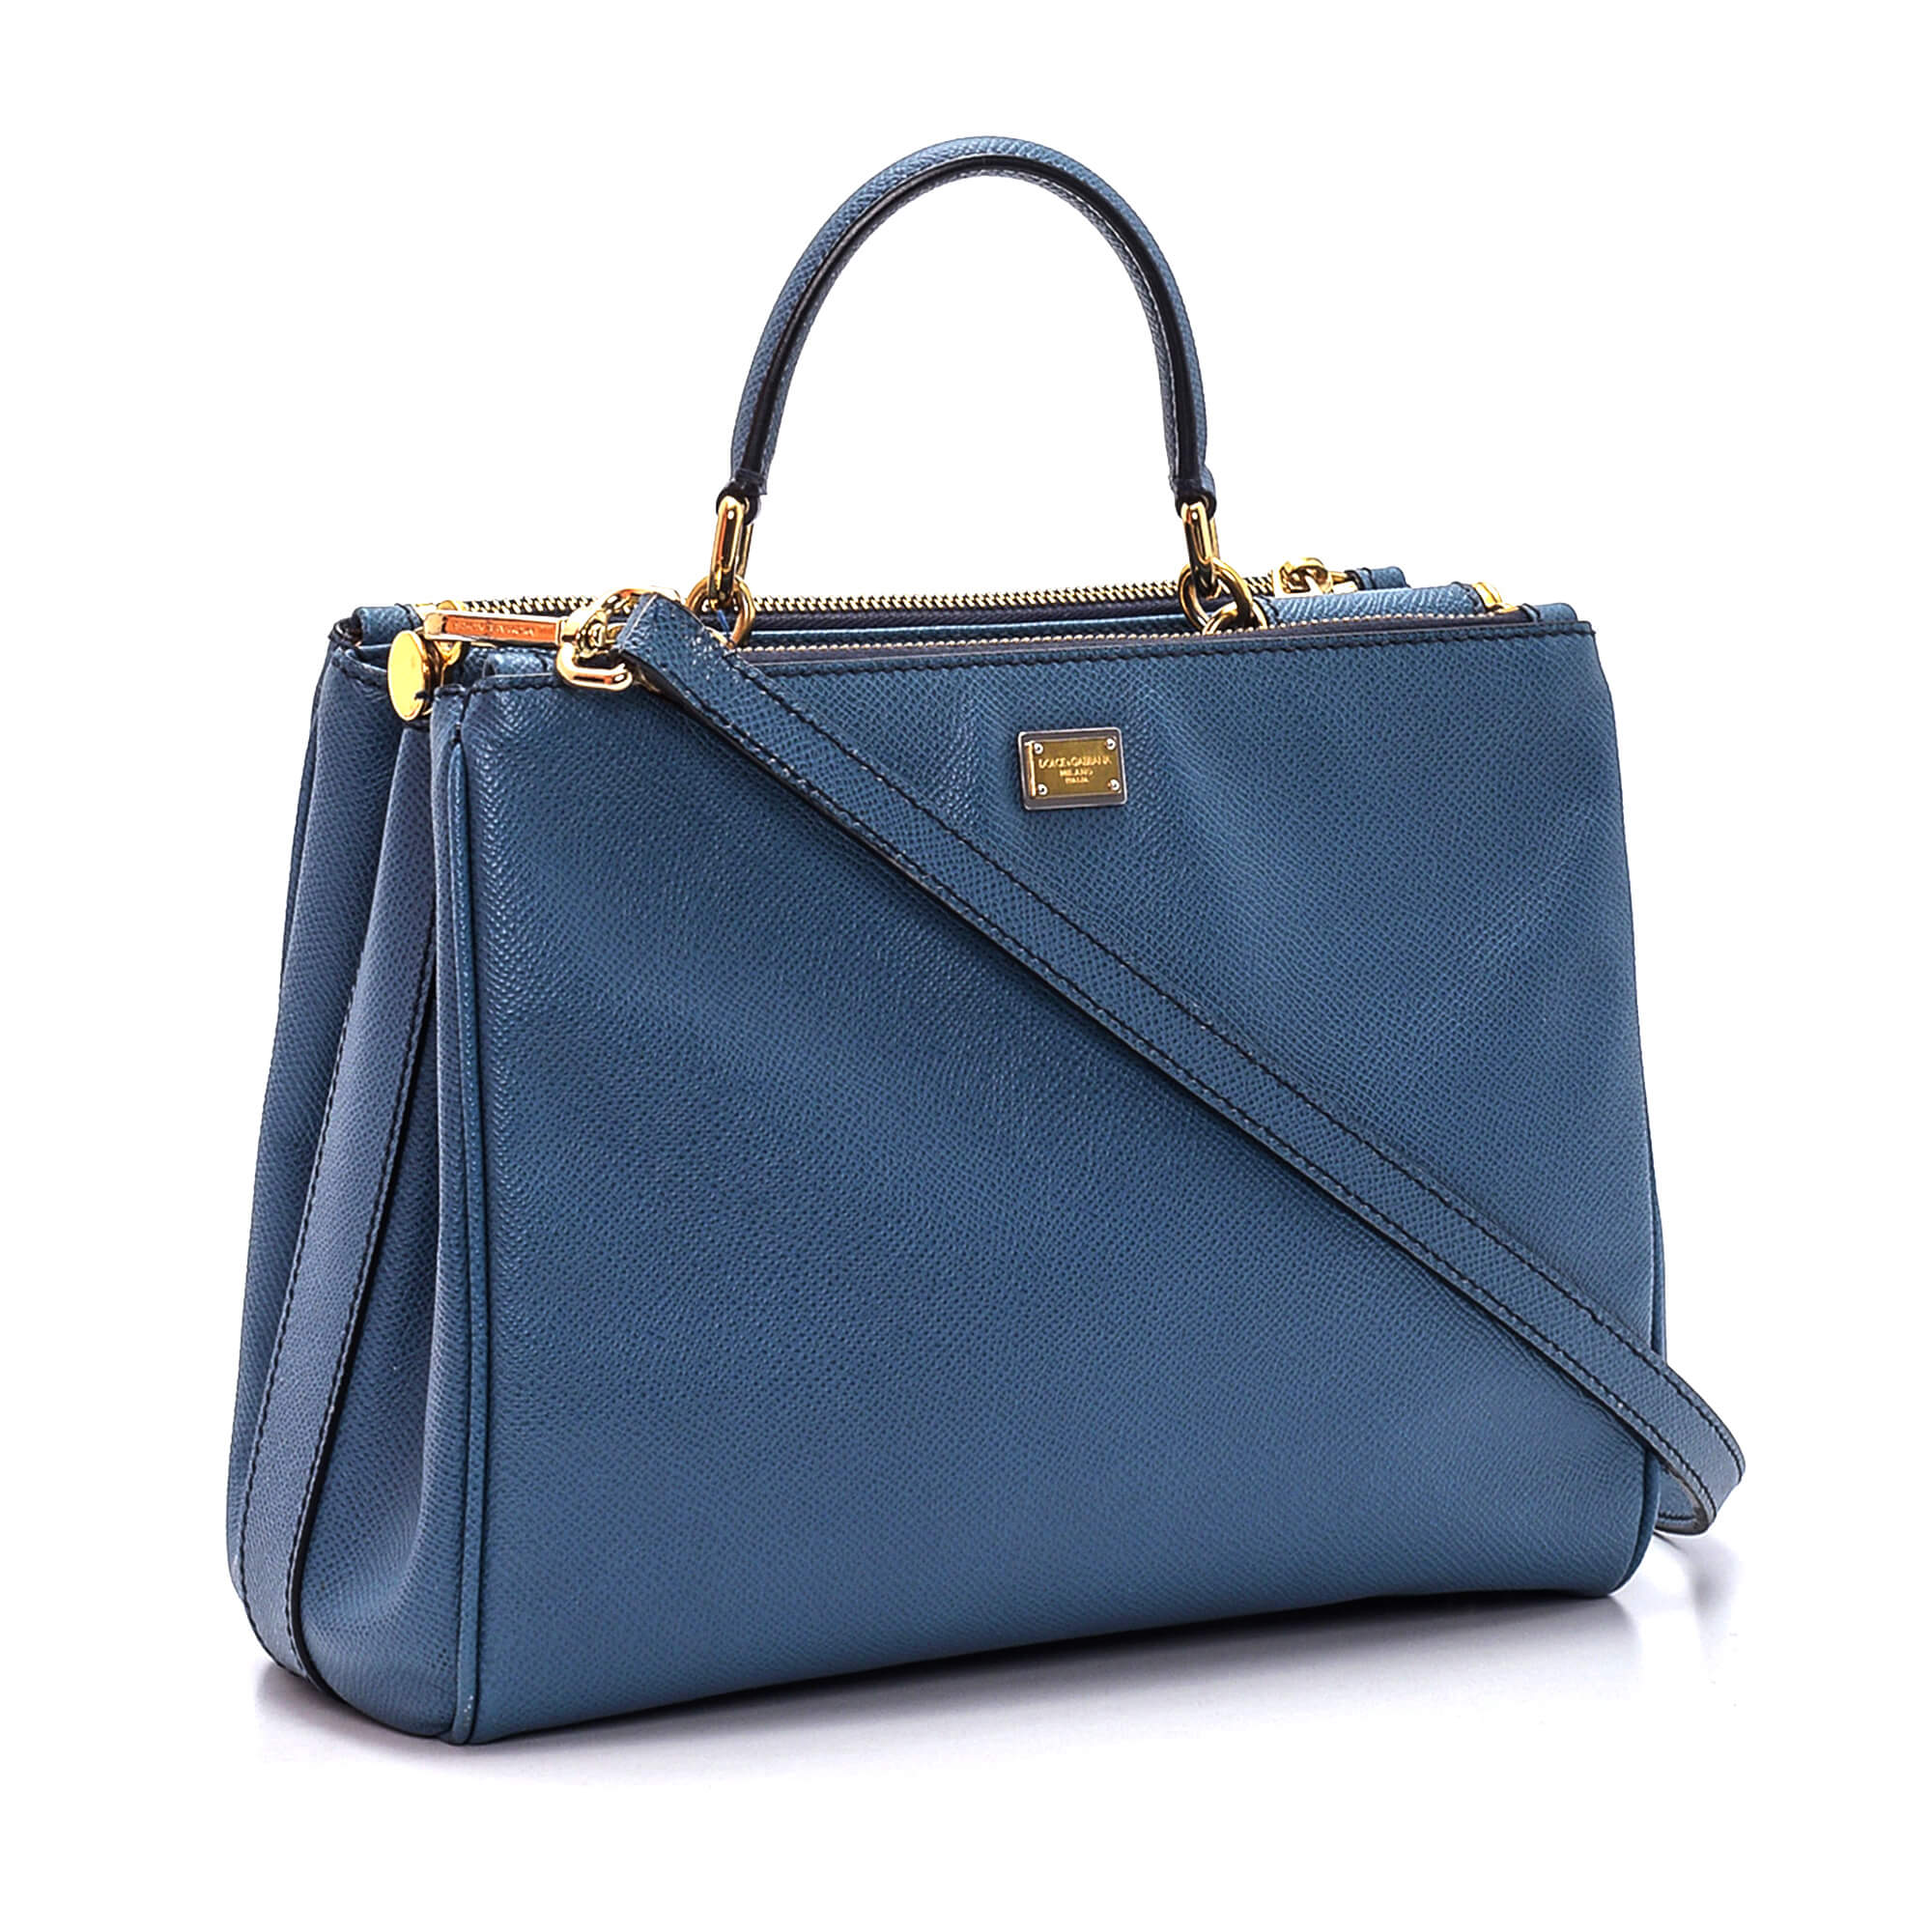 Dolce&Gabbana - Blue Leather Sicily Shopping Bag 